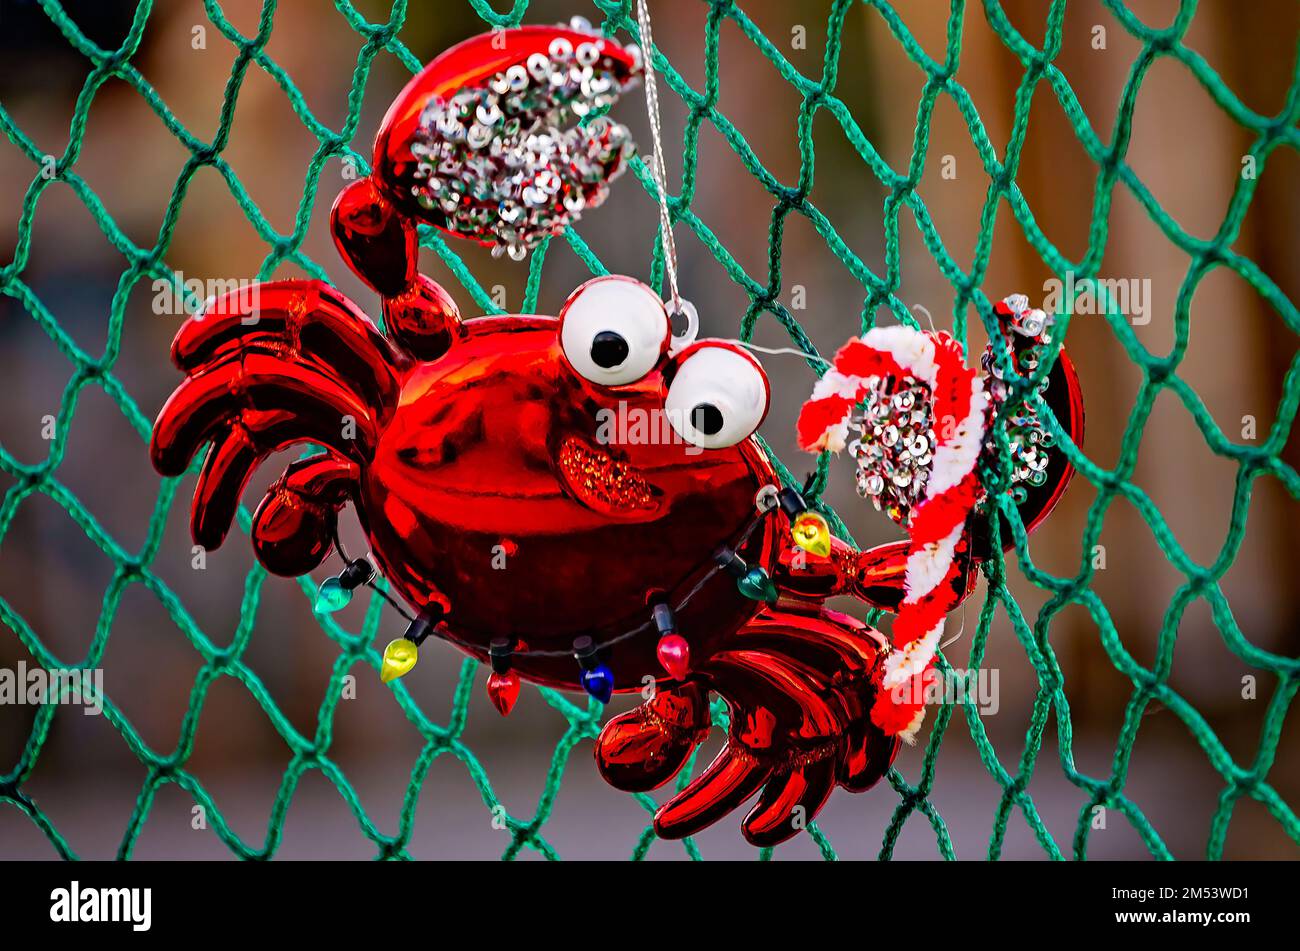 241 Crabbing Net Stock Photos - Free & Royalty-Free Stock Photos